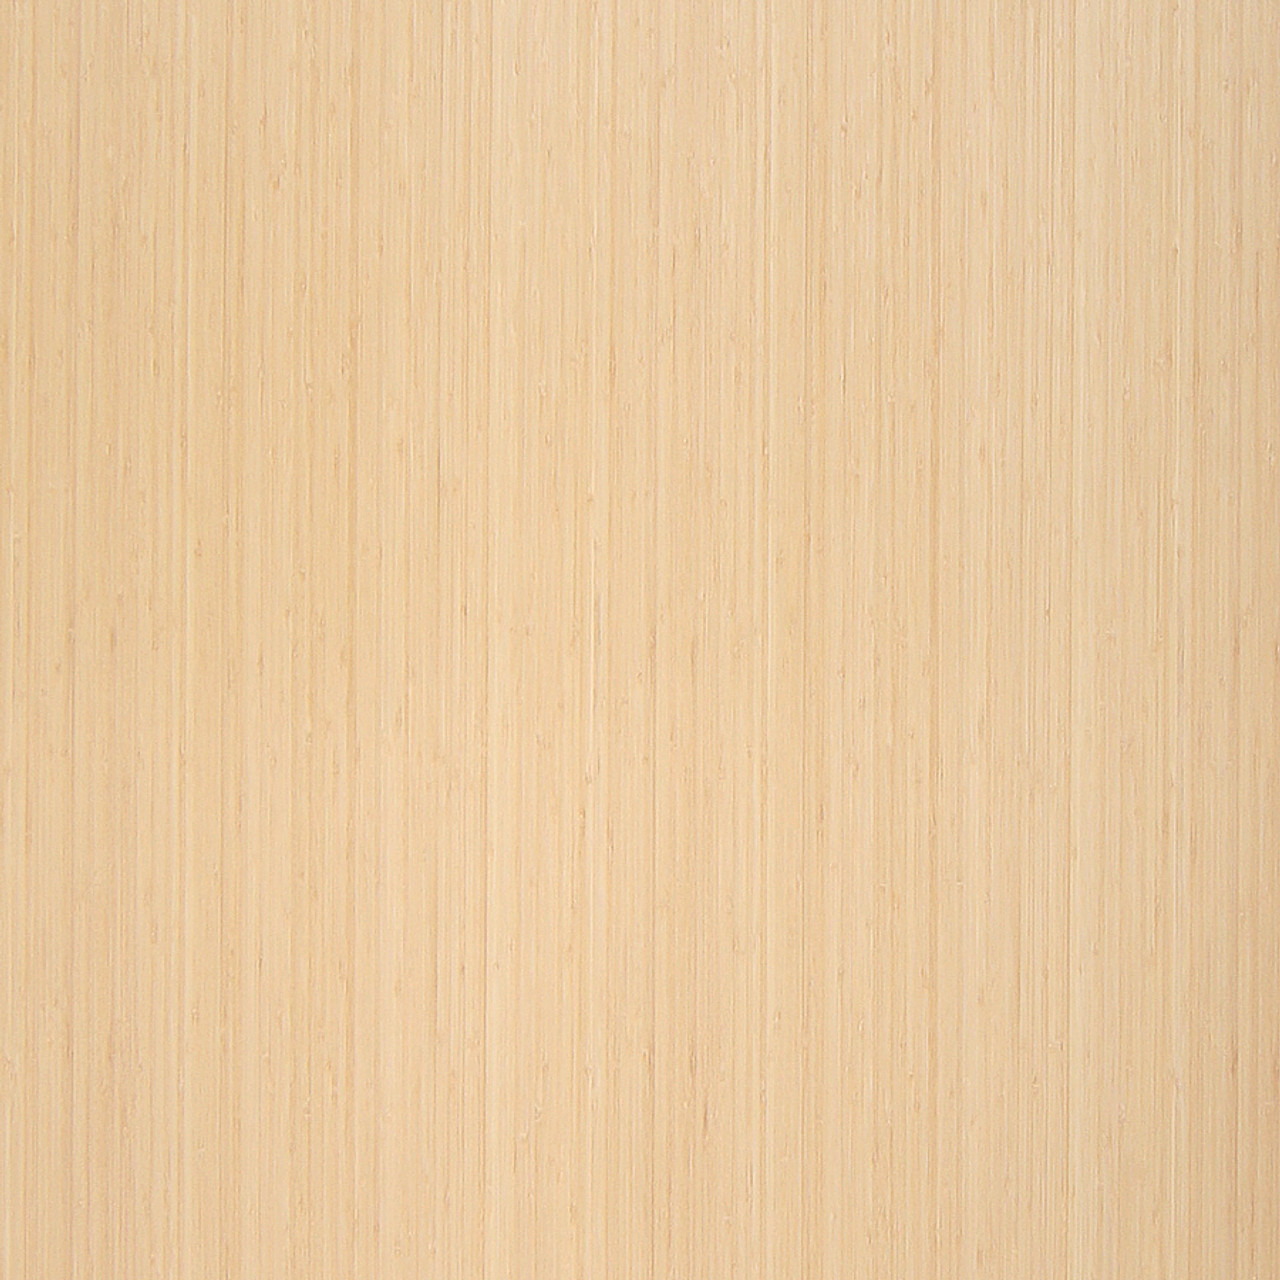 Bamboo Veneer Natural Vertical Boards : Blonde Bamboo Wood Veneer